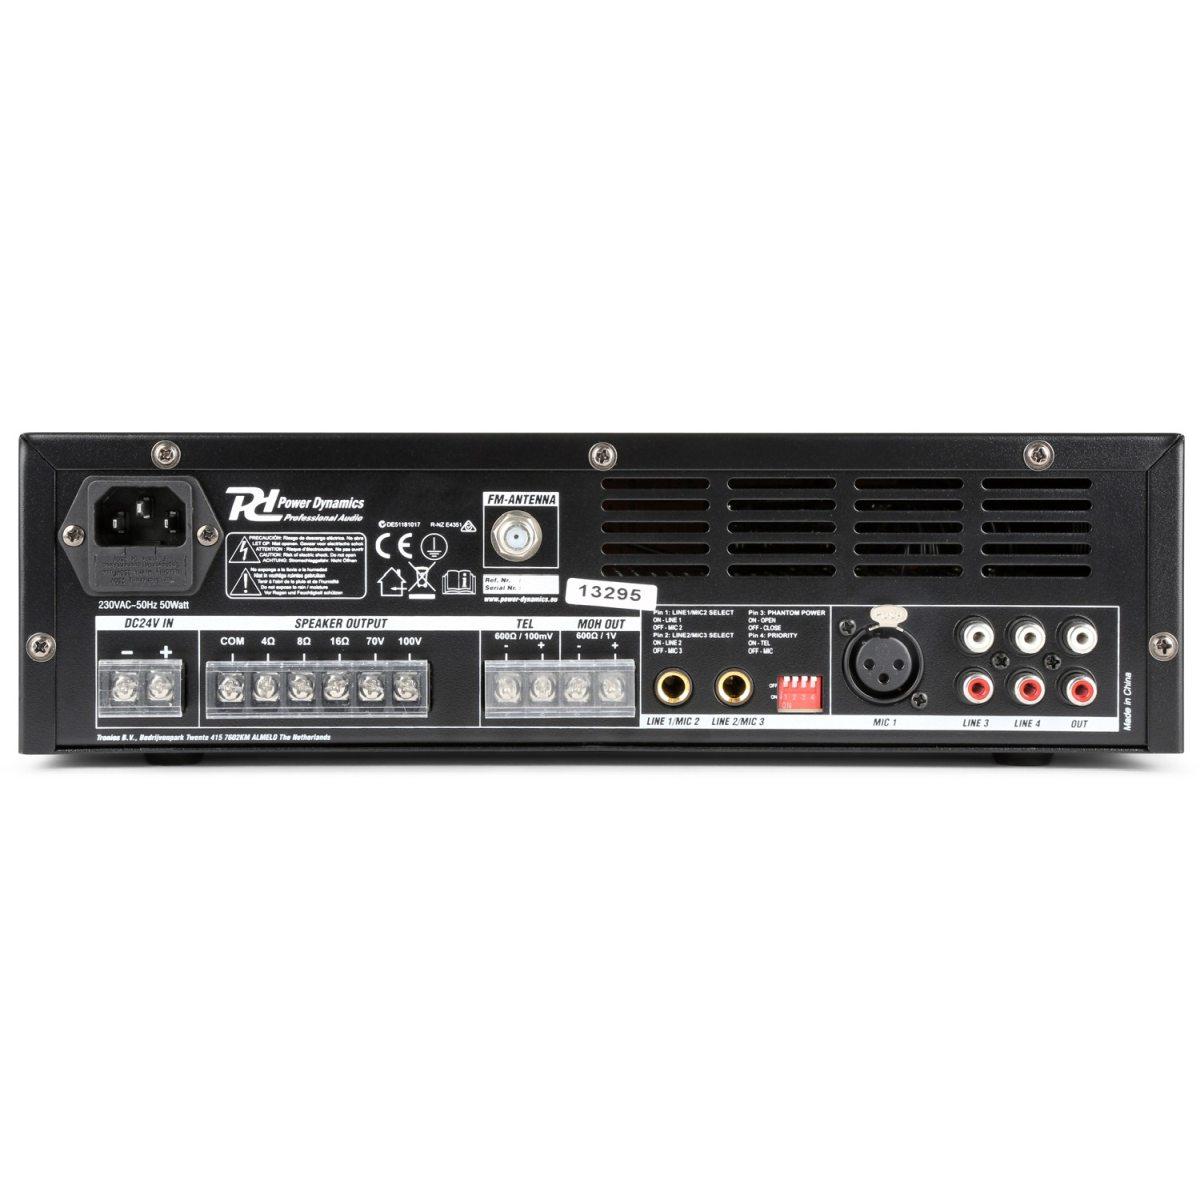 POWER DYNAMICS PBA30 100V Amplifier 30W USB/MP3/BT